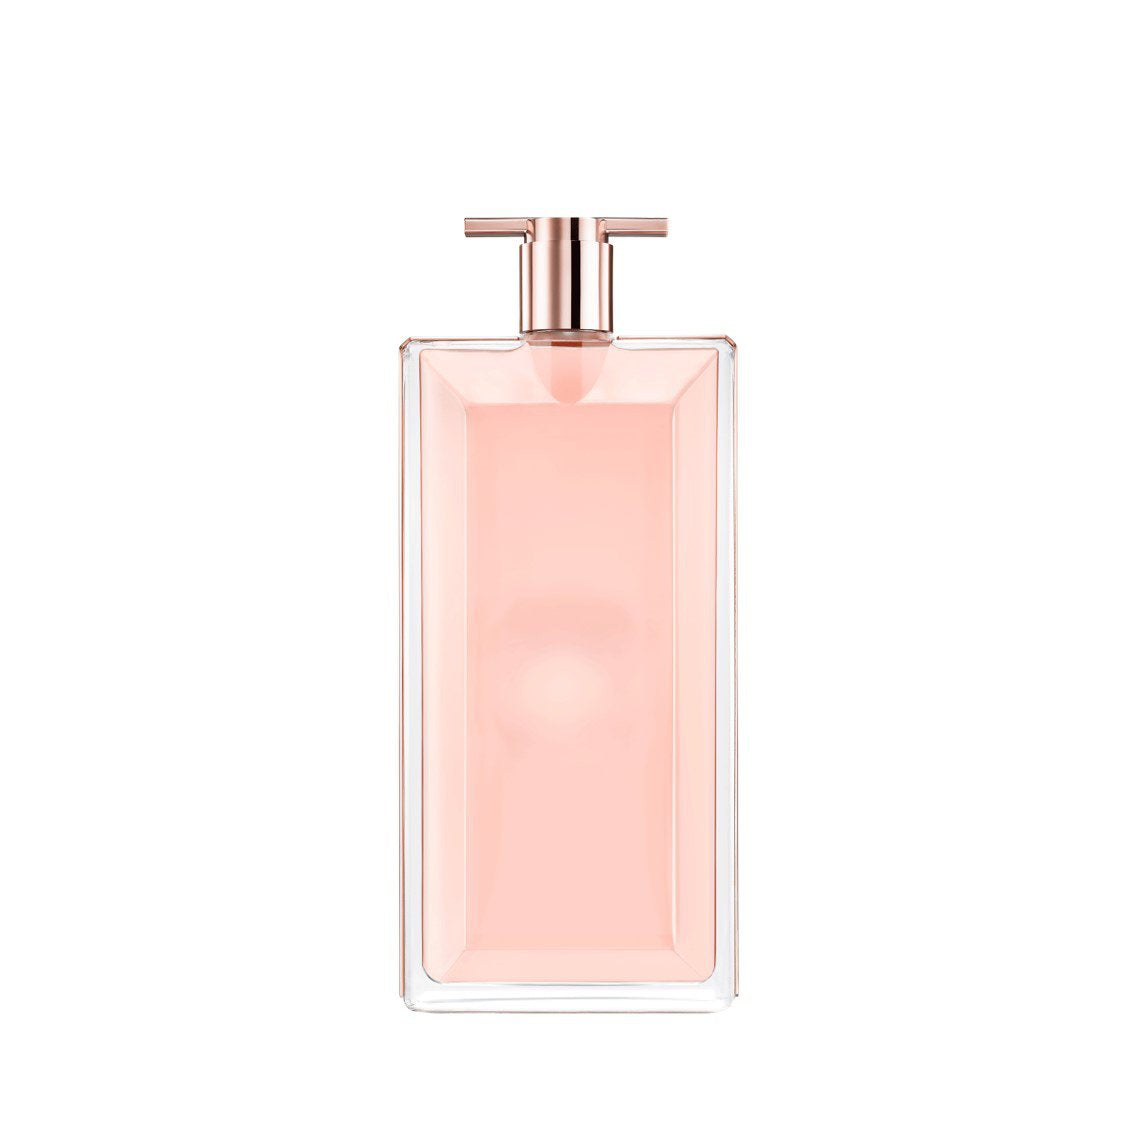 lancome-idole-eau-de-parfum-75-ml